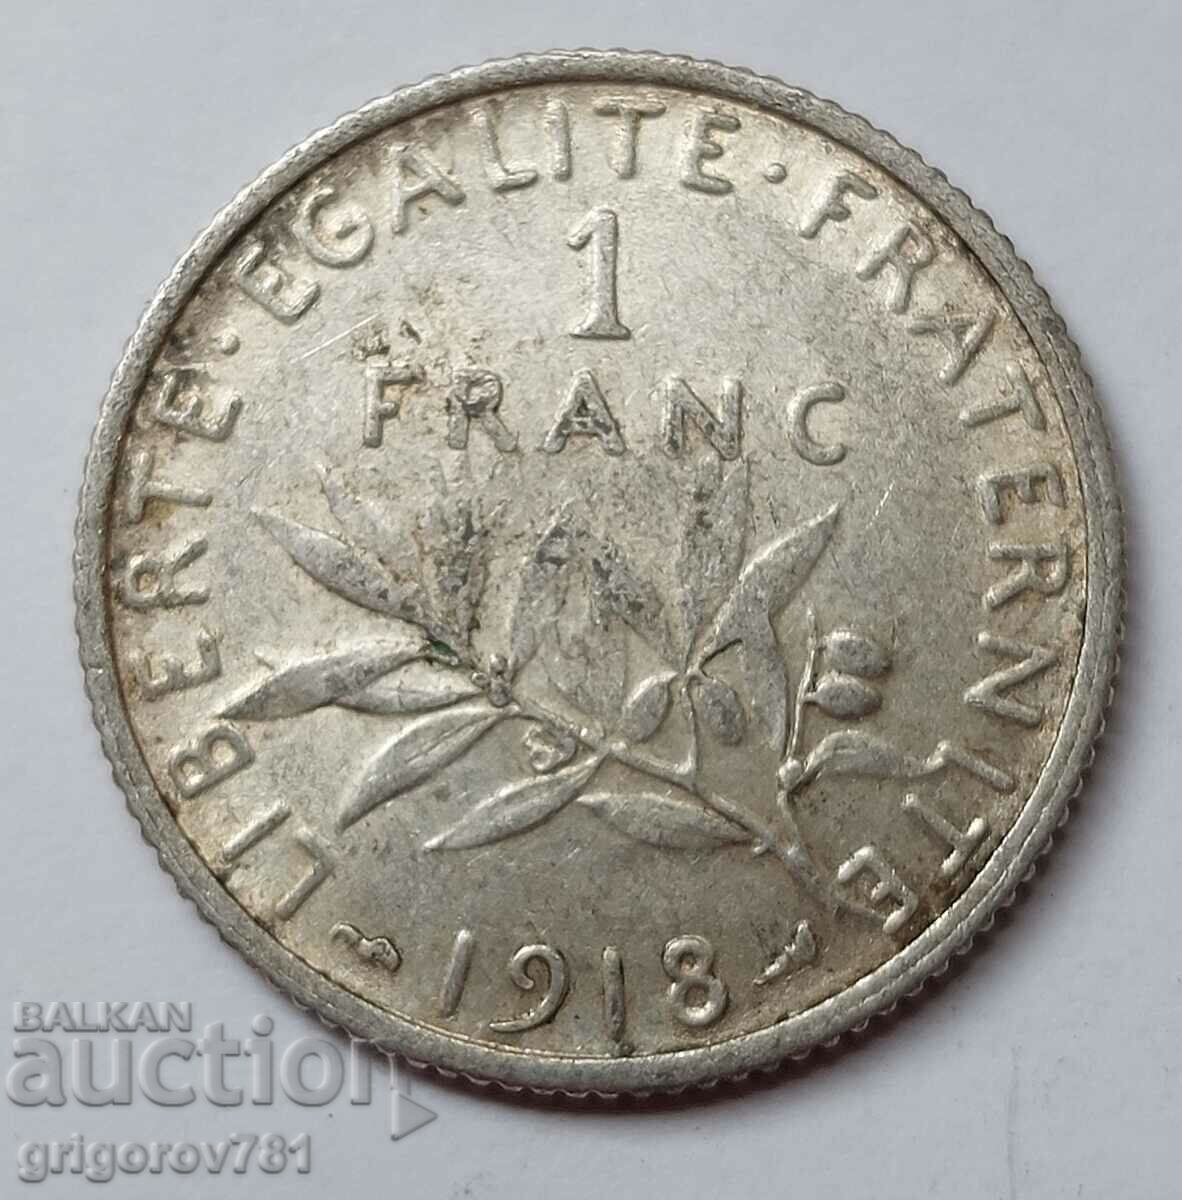 1 franc silver France 1918 - silver coin №17